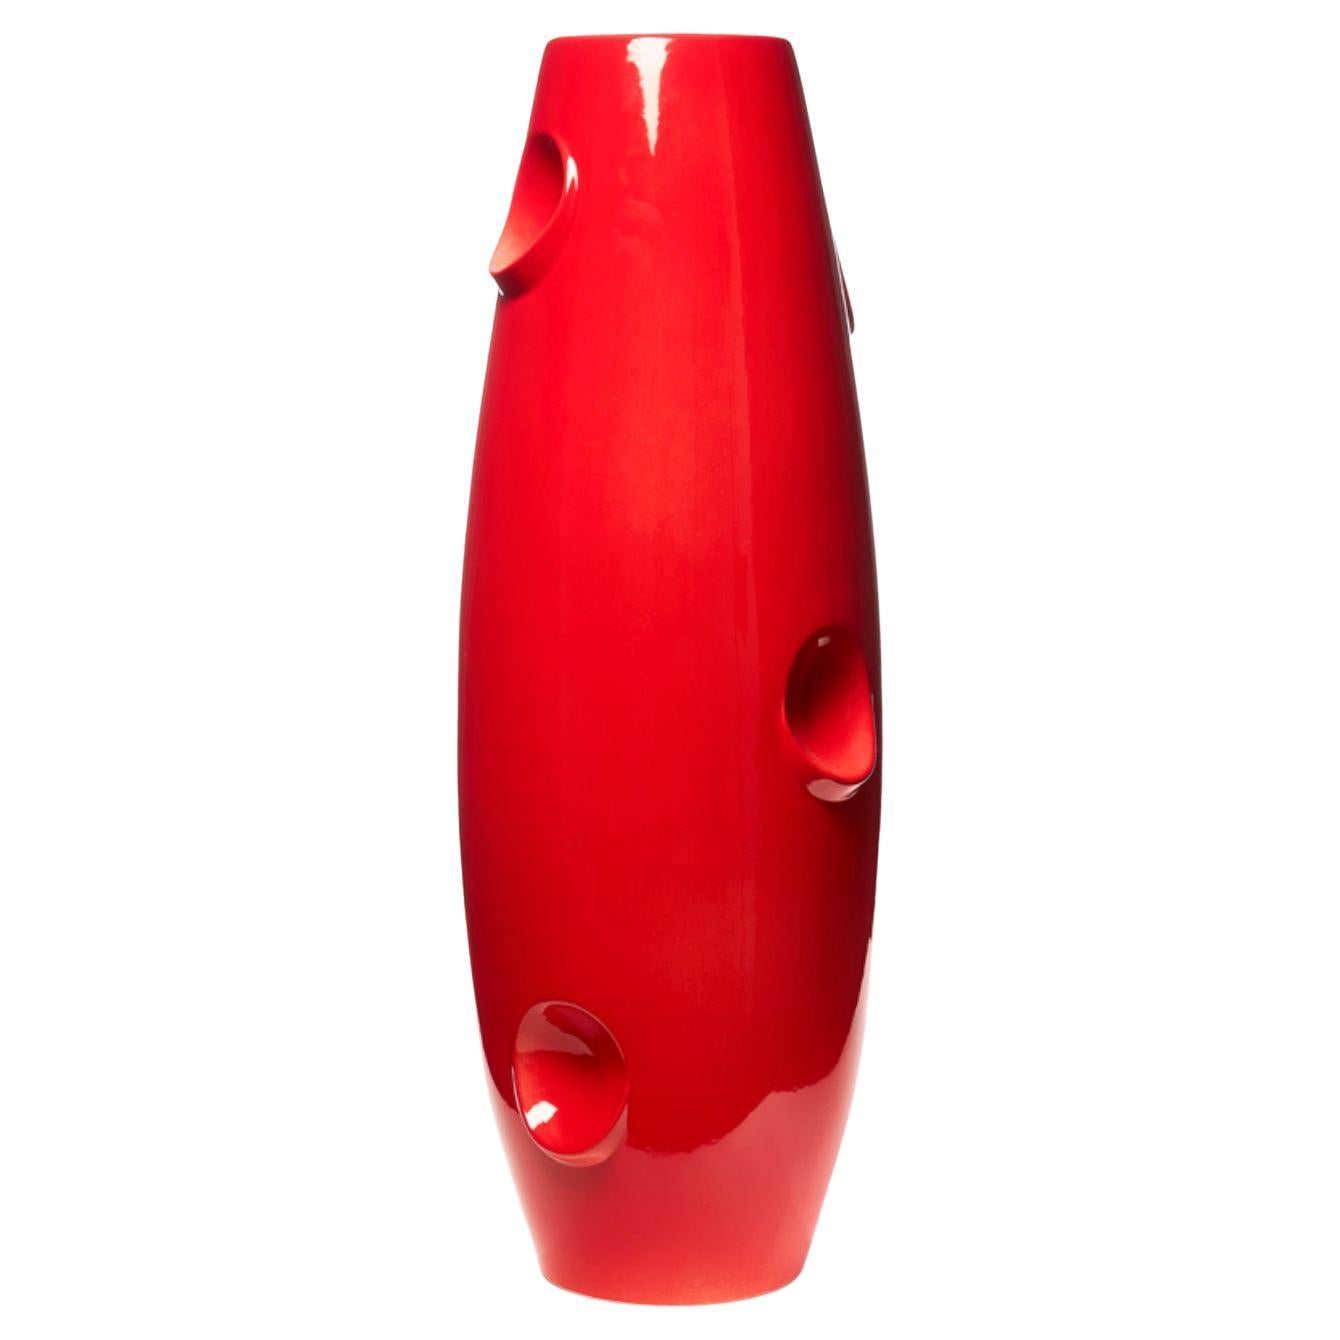 Teresa / Rote Vase von Malwina Konopacka